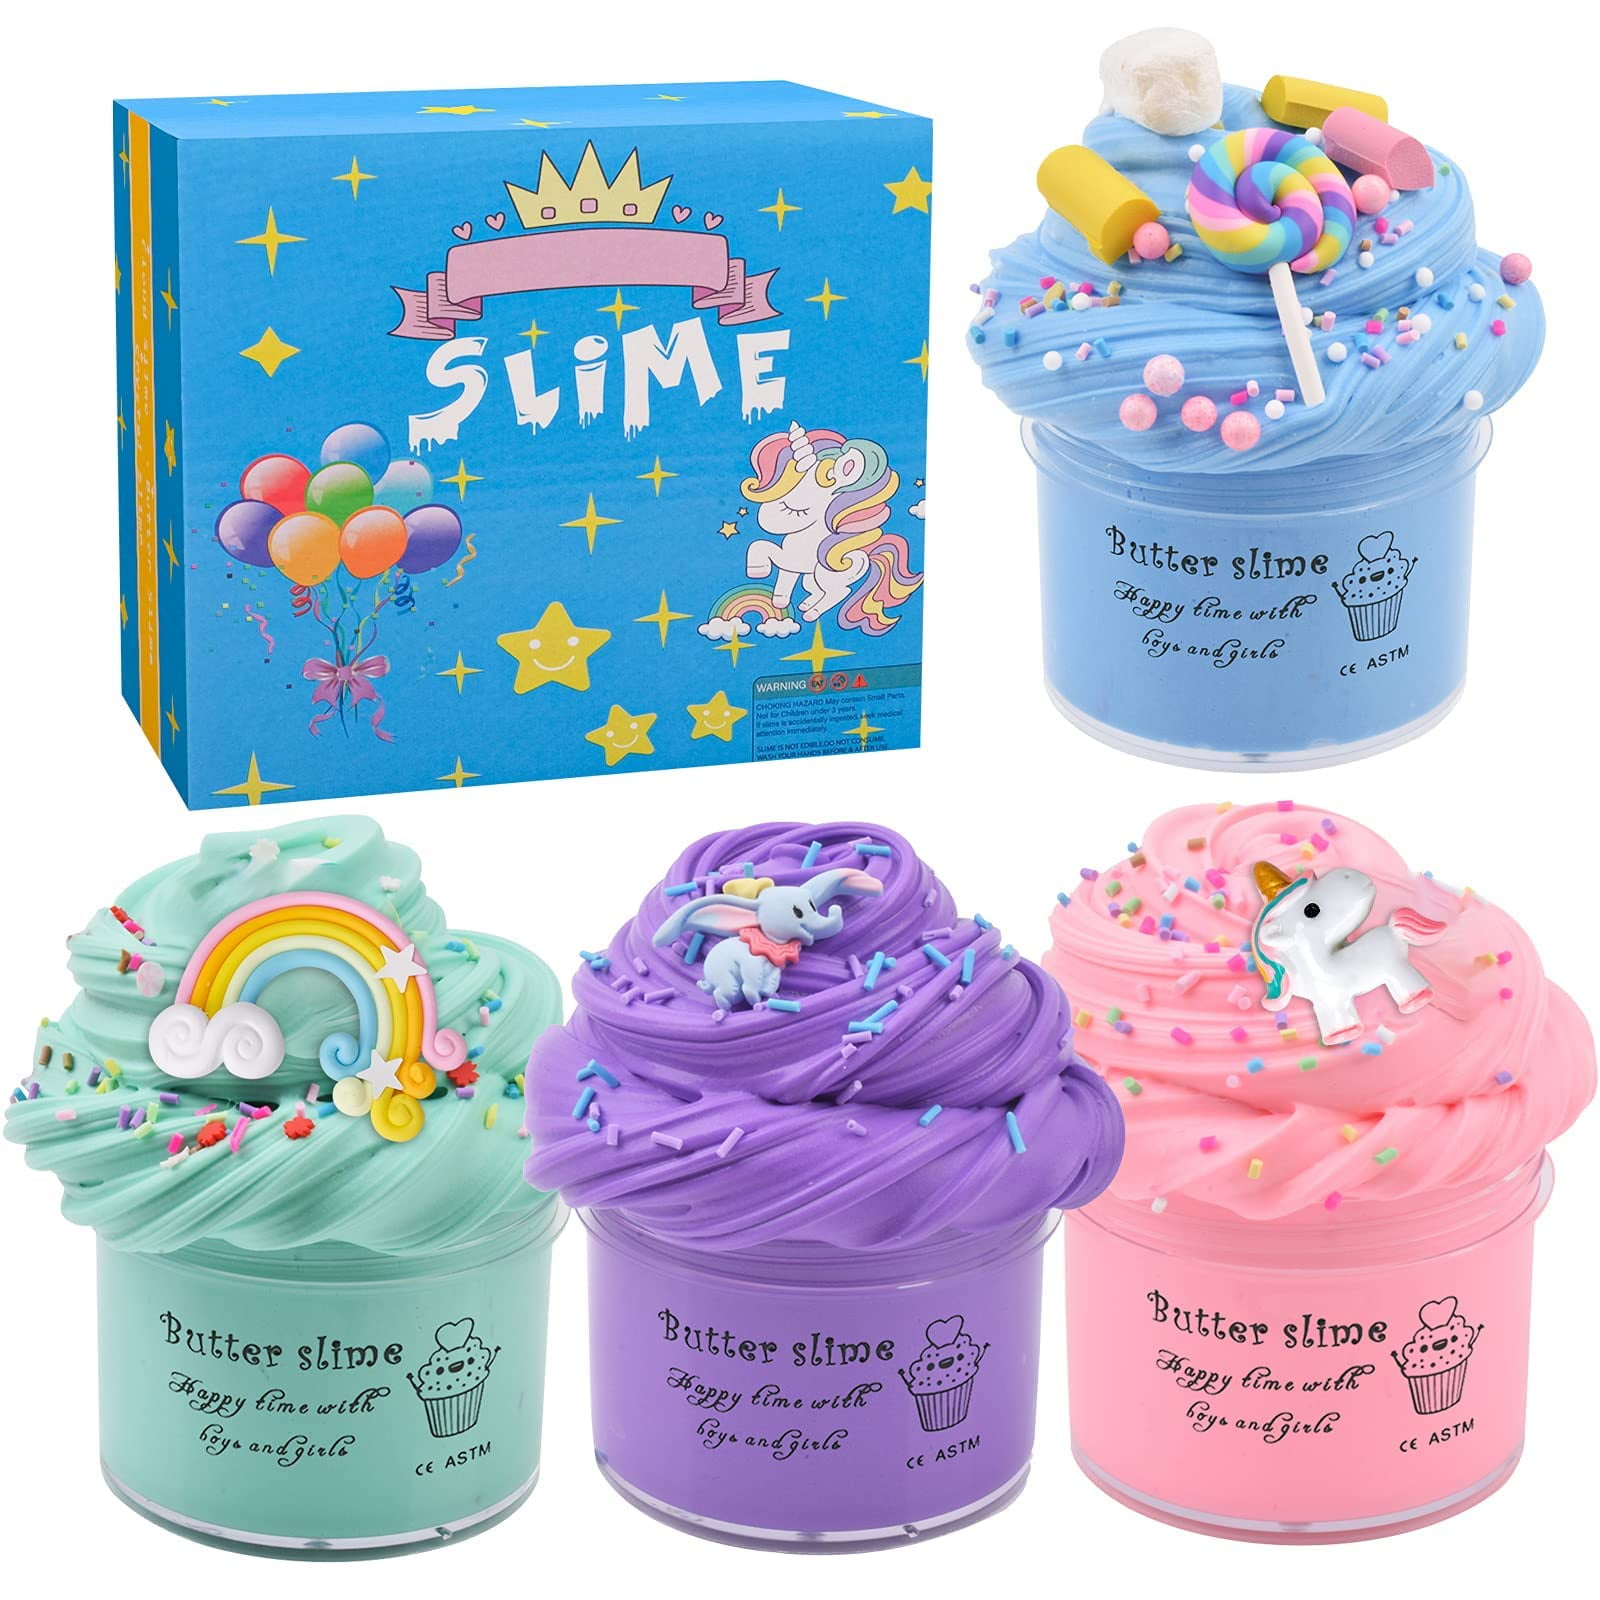  FLINPEX Butter Slime Kit Cloud Slime kit for Girls Ages 8-12  peachybbies Slime Kits for Girls 6-8 ice Cream Slime kit for Boys Party  Favor Gift and Birthday Slime Kits Fluffy